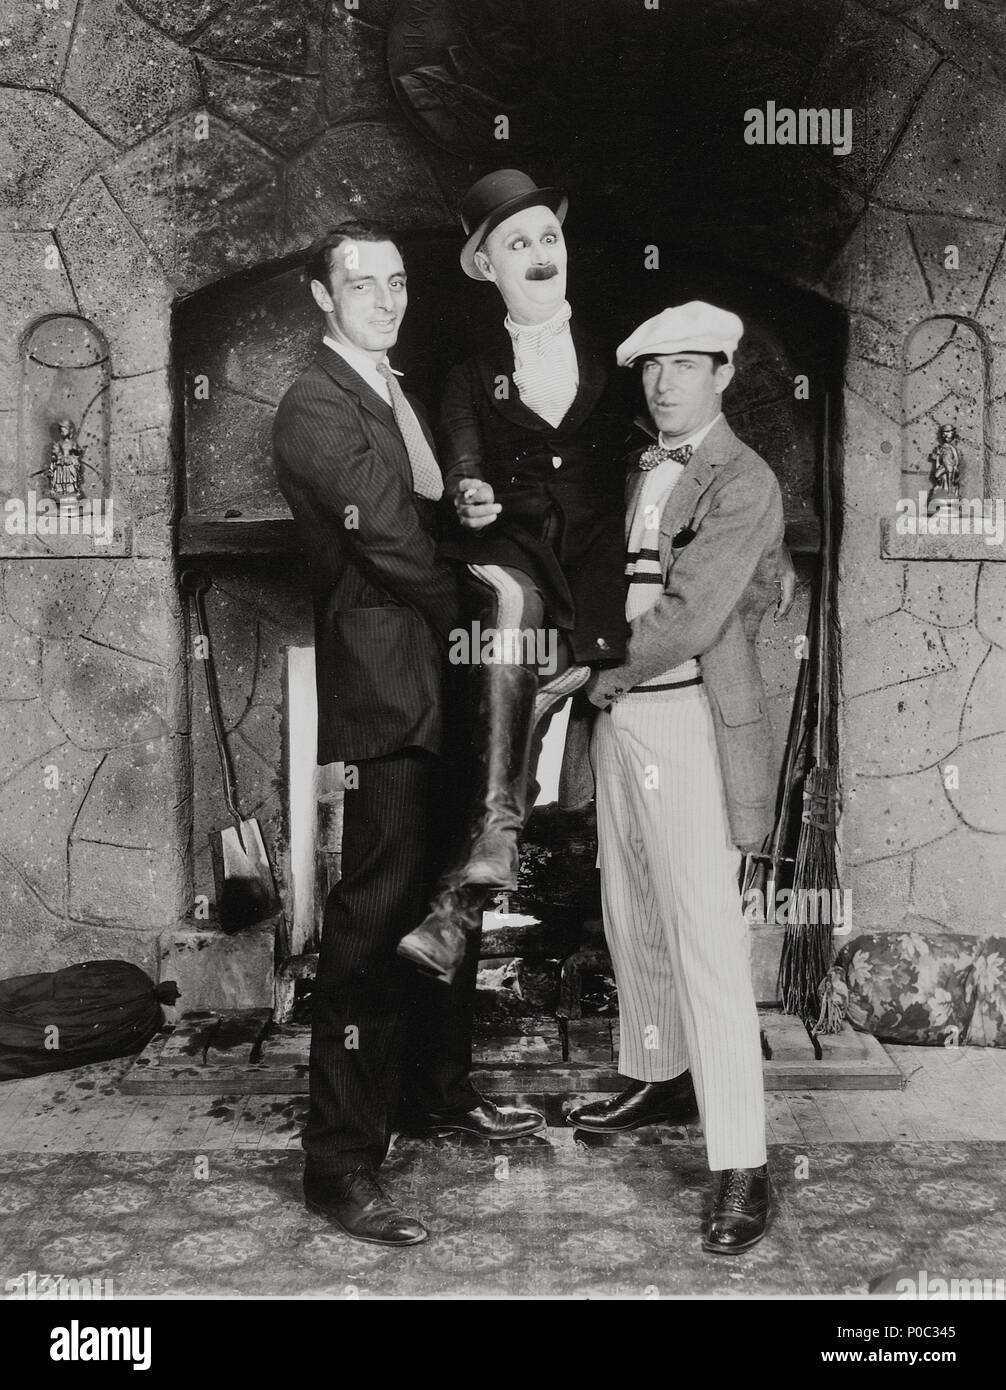 Description: Comedy actors of the Mack Sennett Comedies Corporation posing..  Original Film Title: MACK SENNETT COMEDY.  English Title: MACK SENNETT COMEDY.  Stars: ARTHUR RIPLEY; BEN TURPIN. Stock Photo